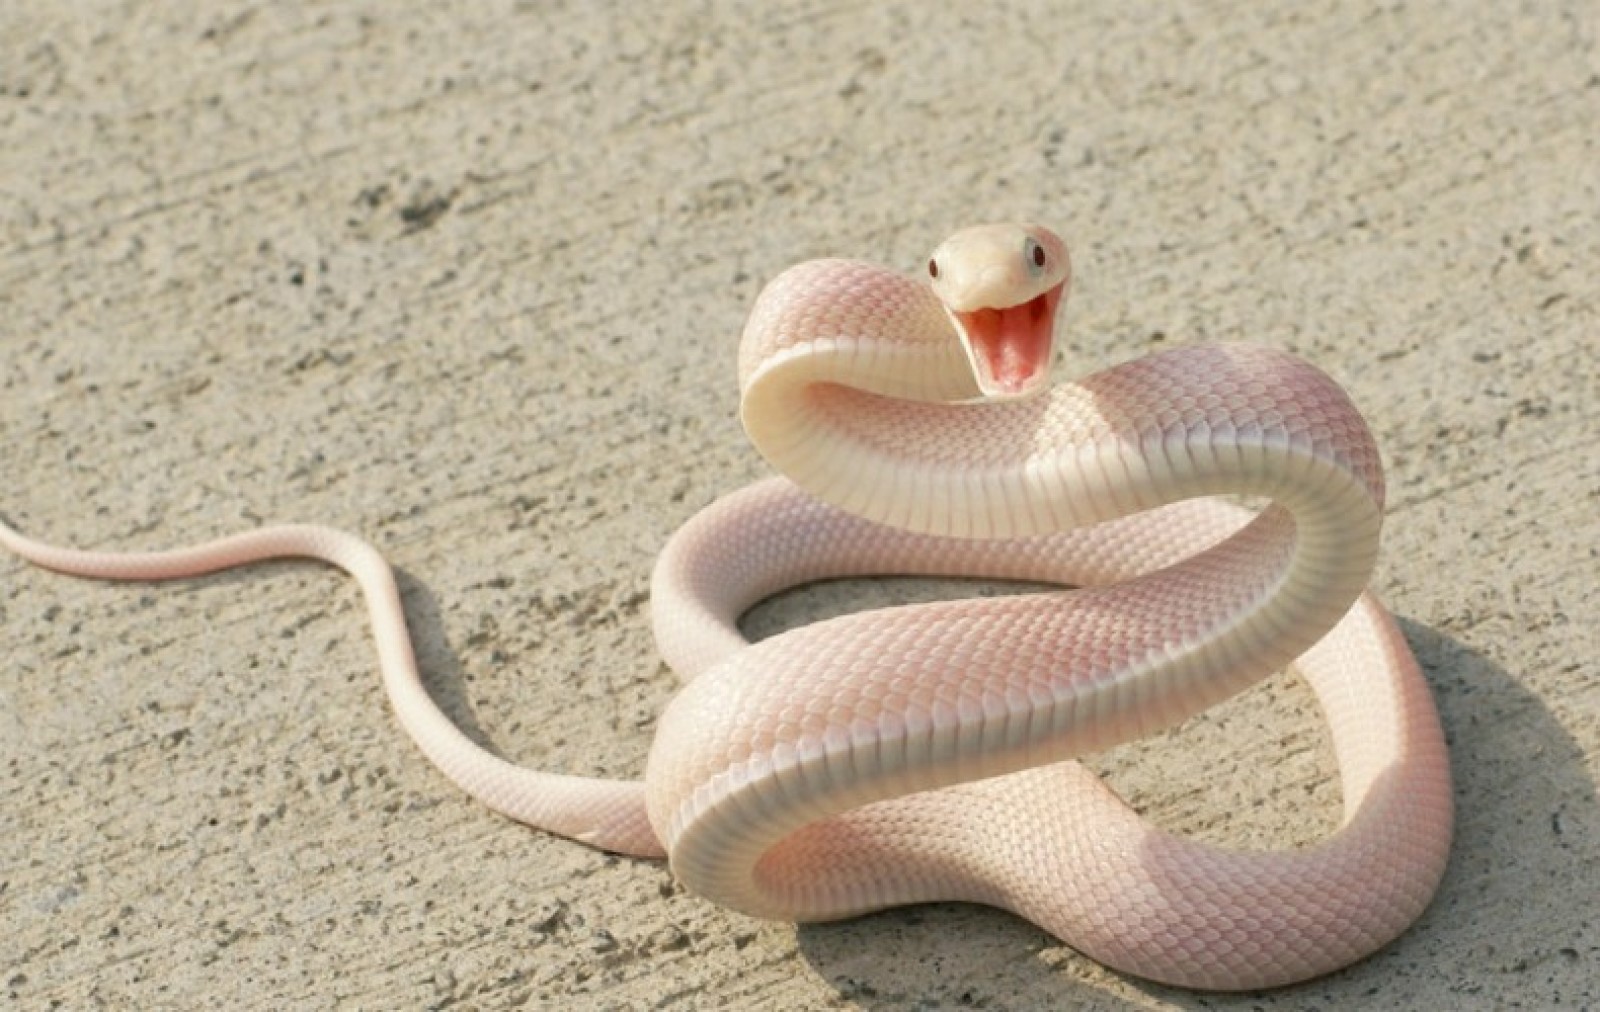 Entrevista com Solange, a serpente sigilosa